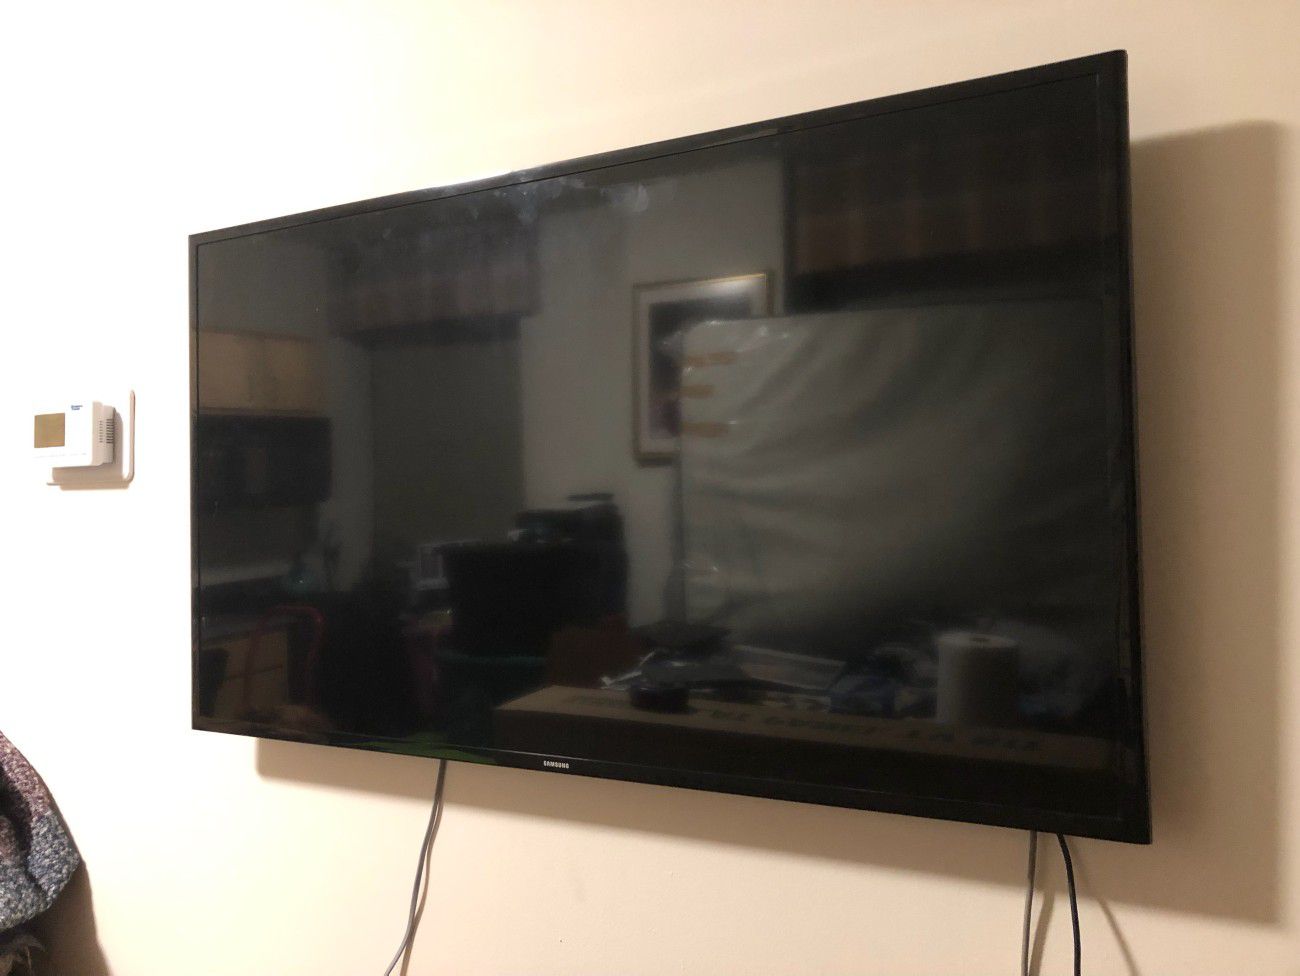 Samsung 47" Smart TV w/wall mount